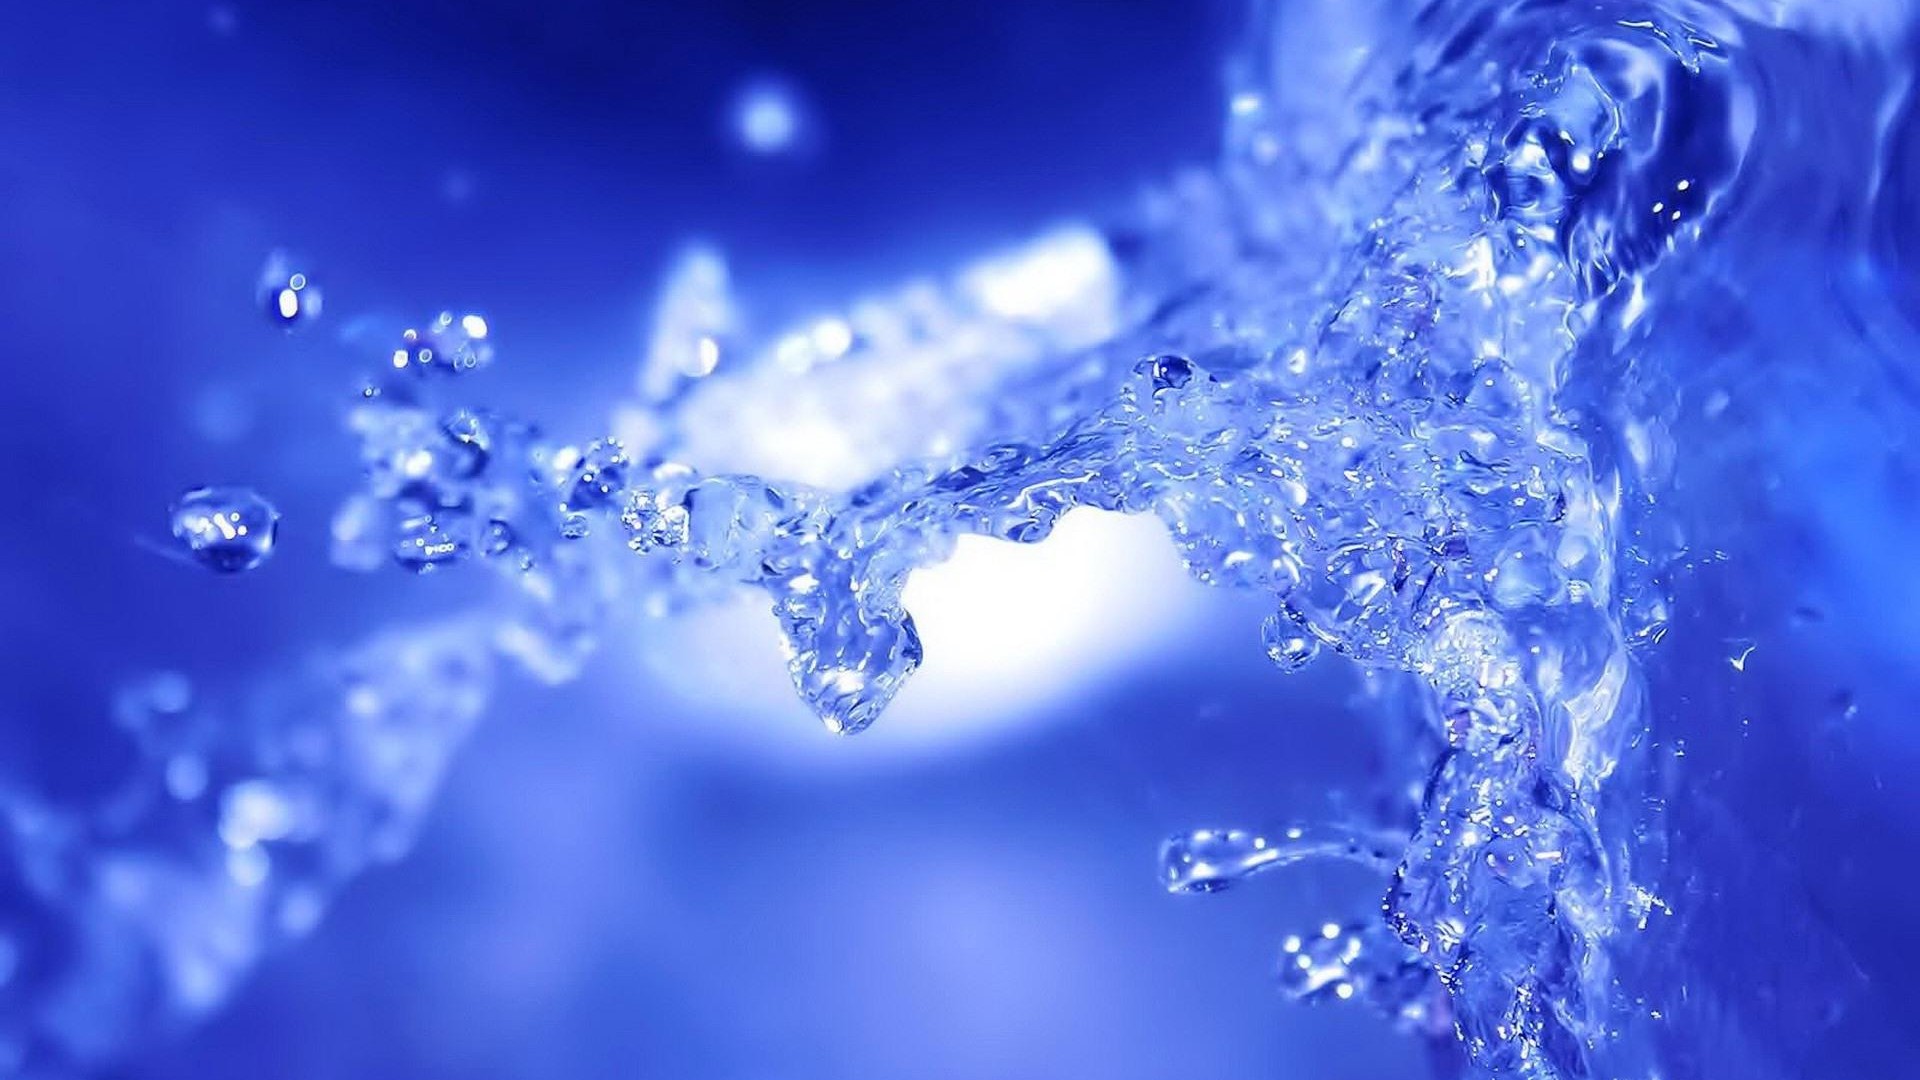 air conditioner wallpaper,blue,water,freezing,macro photography,liquid